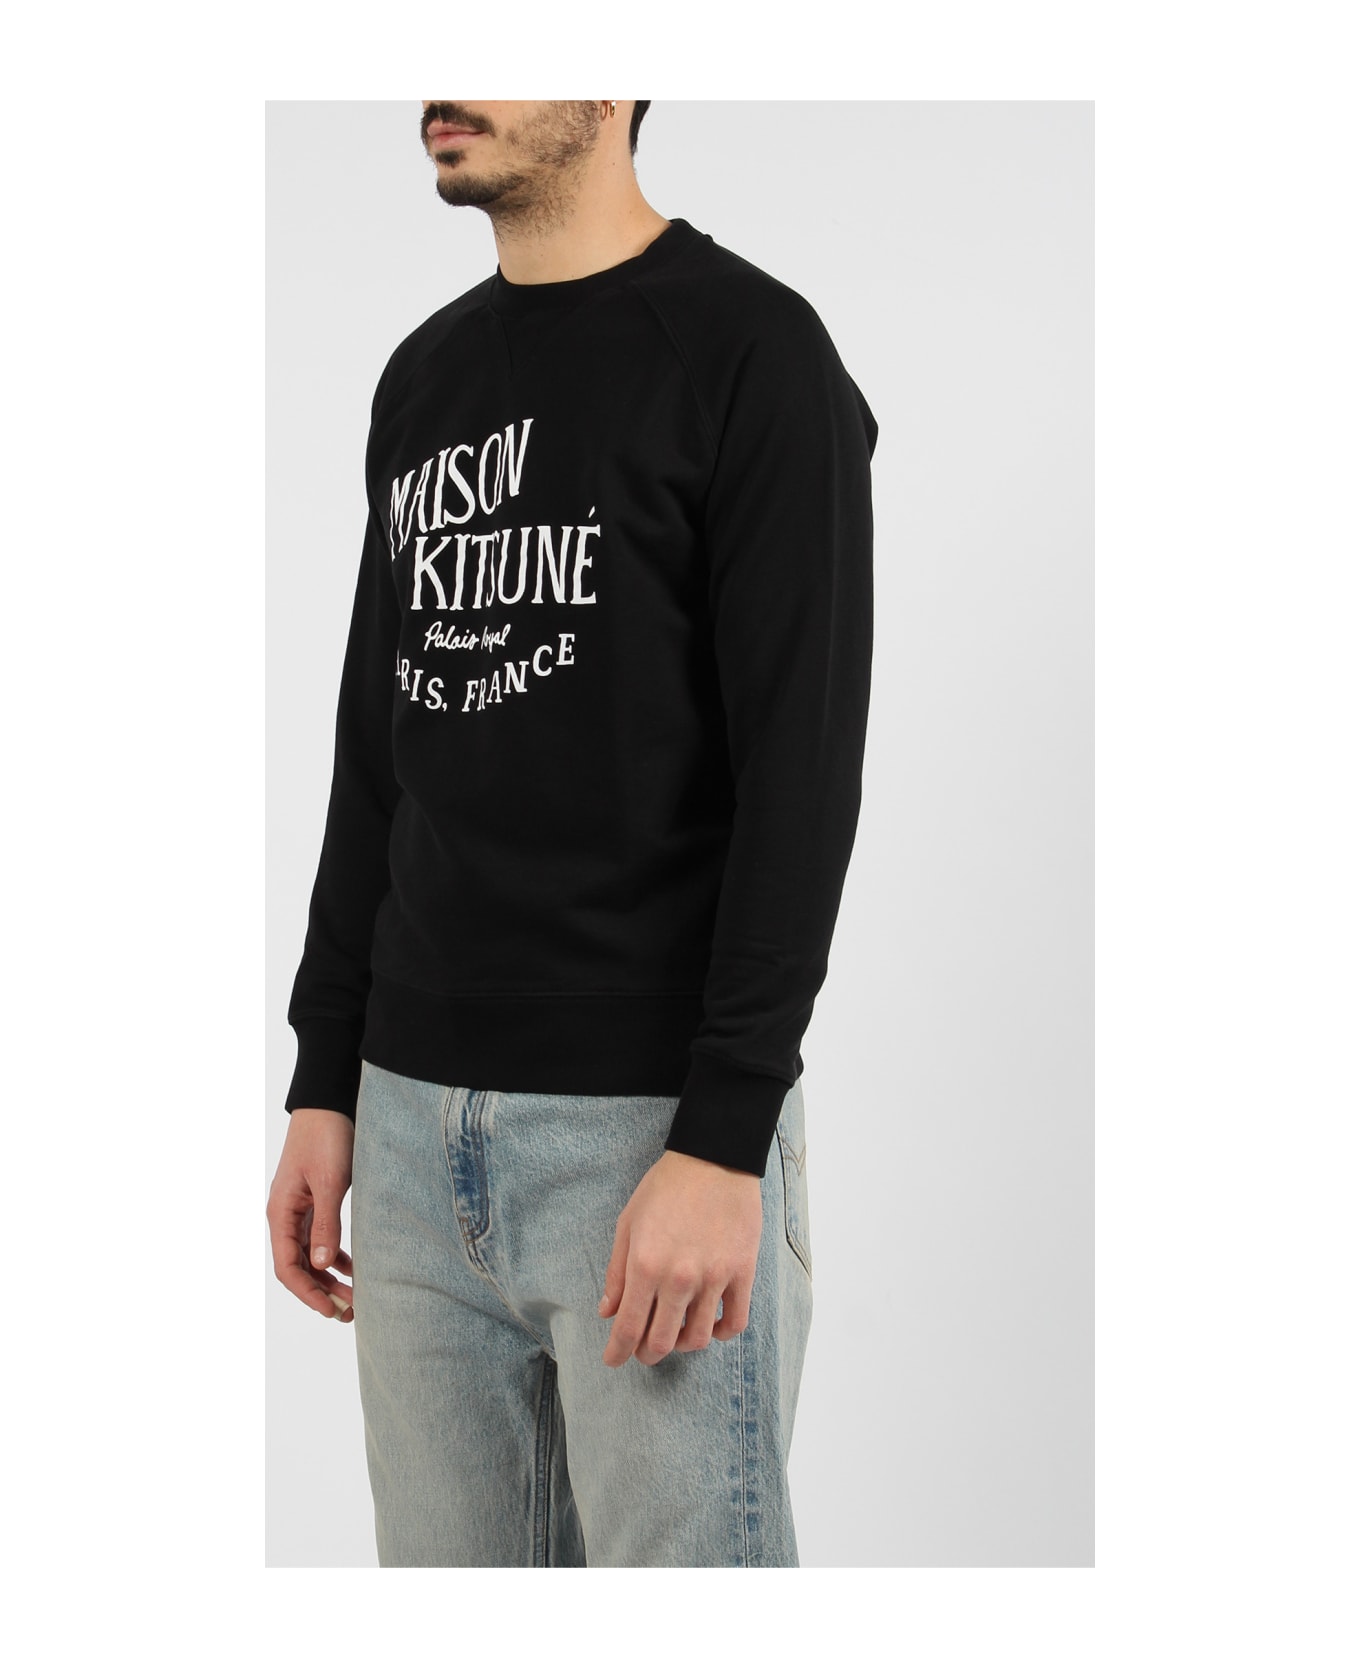 Maison Kitsuné Palais Royale Classic Sweatshirt - Black